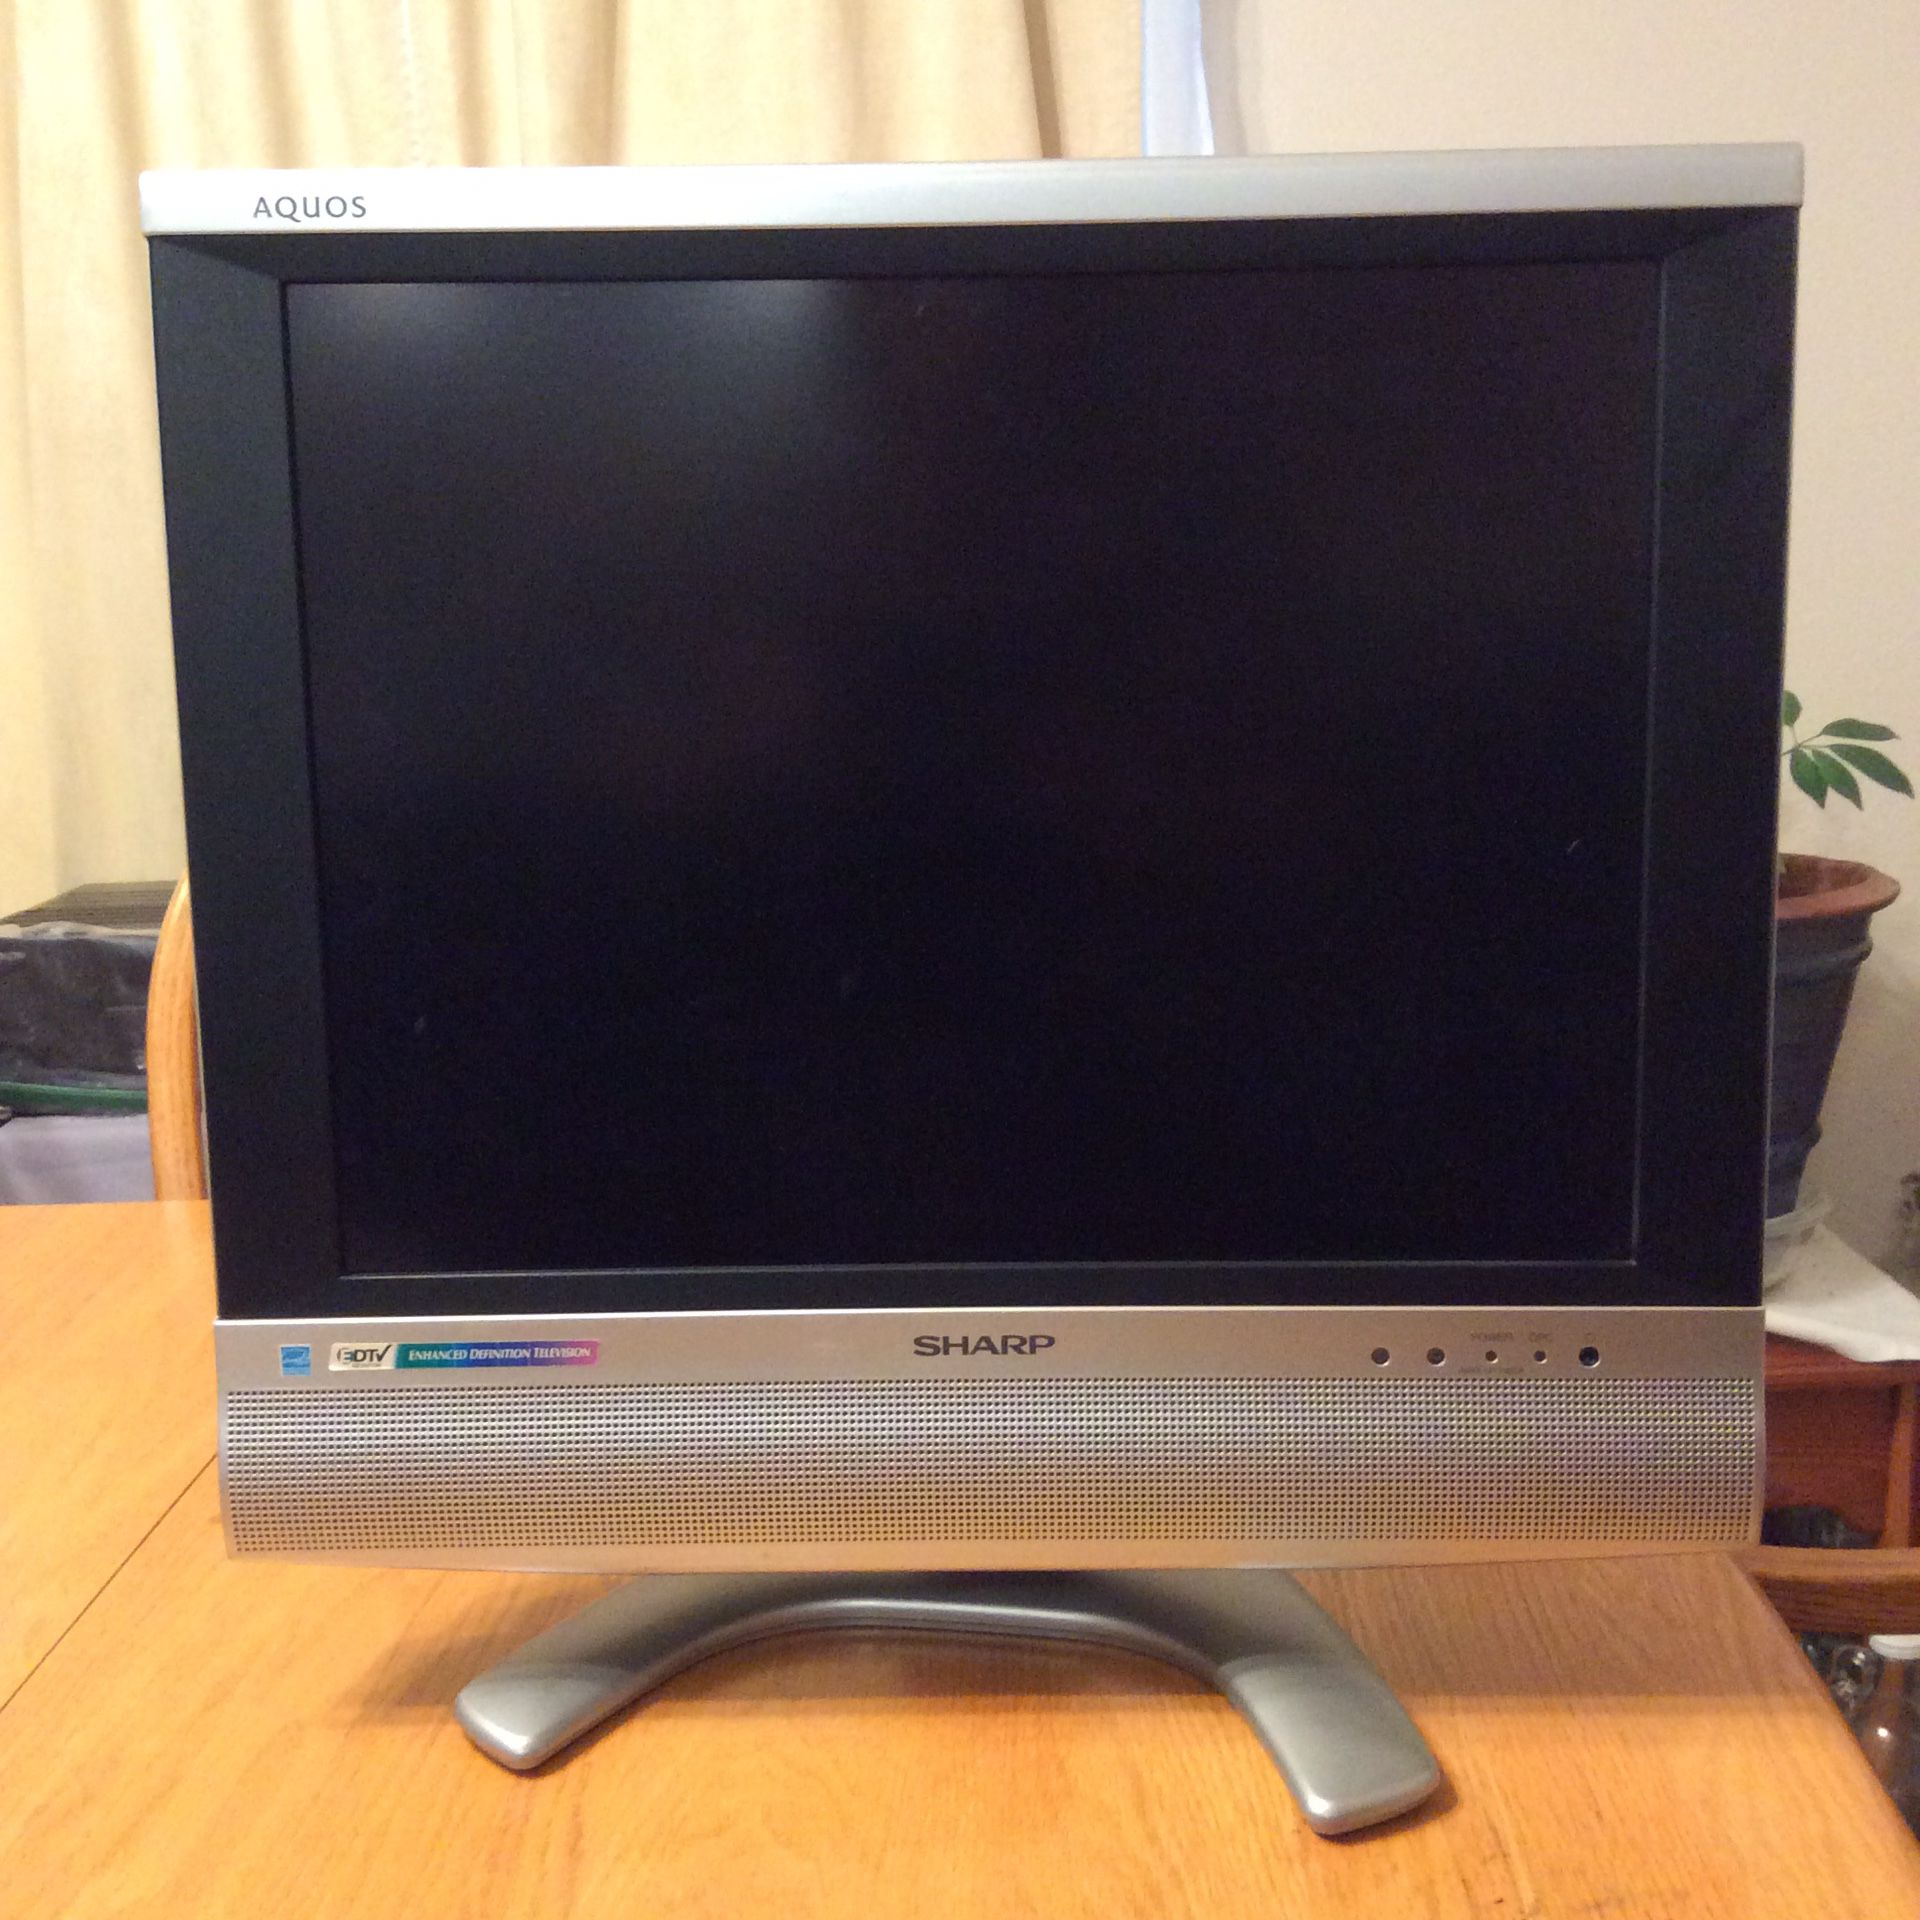 Sharp LCD TV - Model LC-20S5U